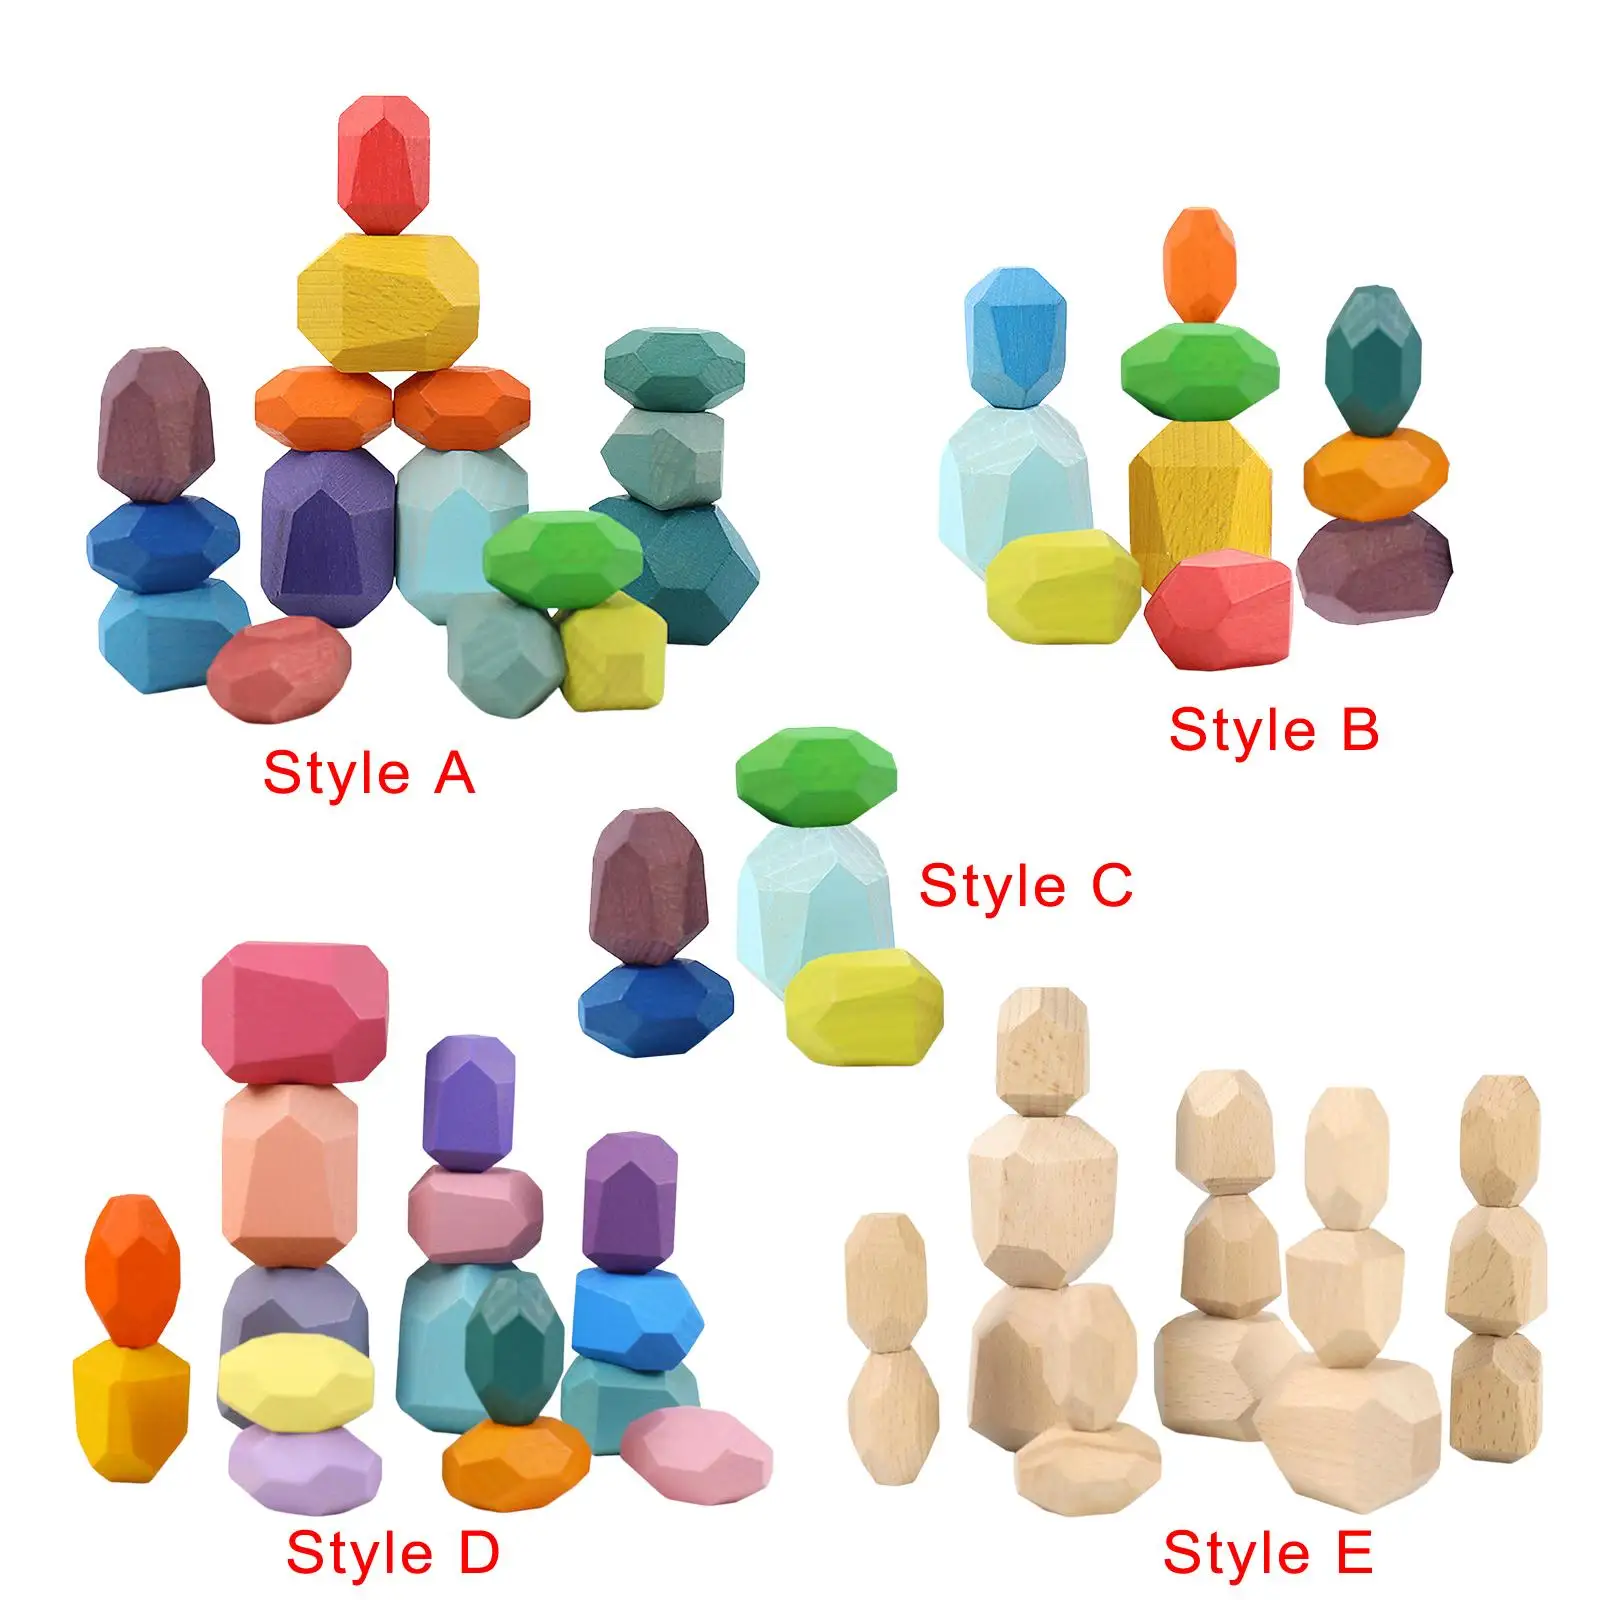 Wooden Balancing Stacking Stones Montessori Preschool Learning Building Blocks Stacking Game for Boys Girls